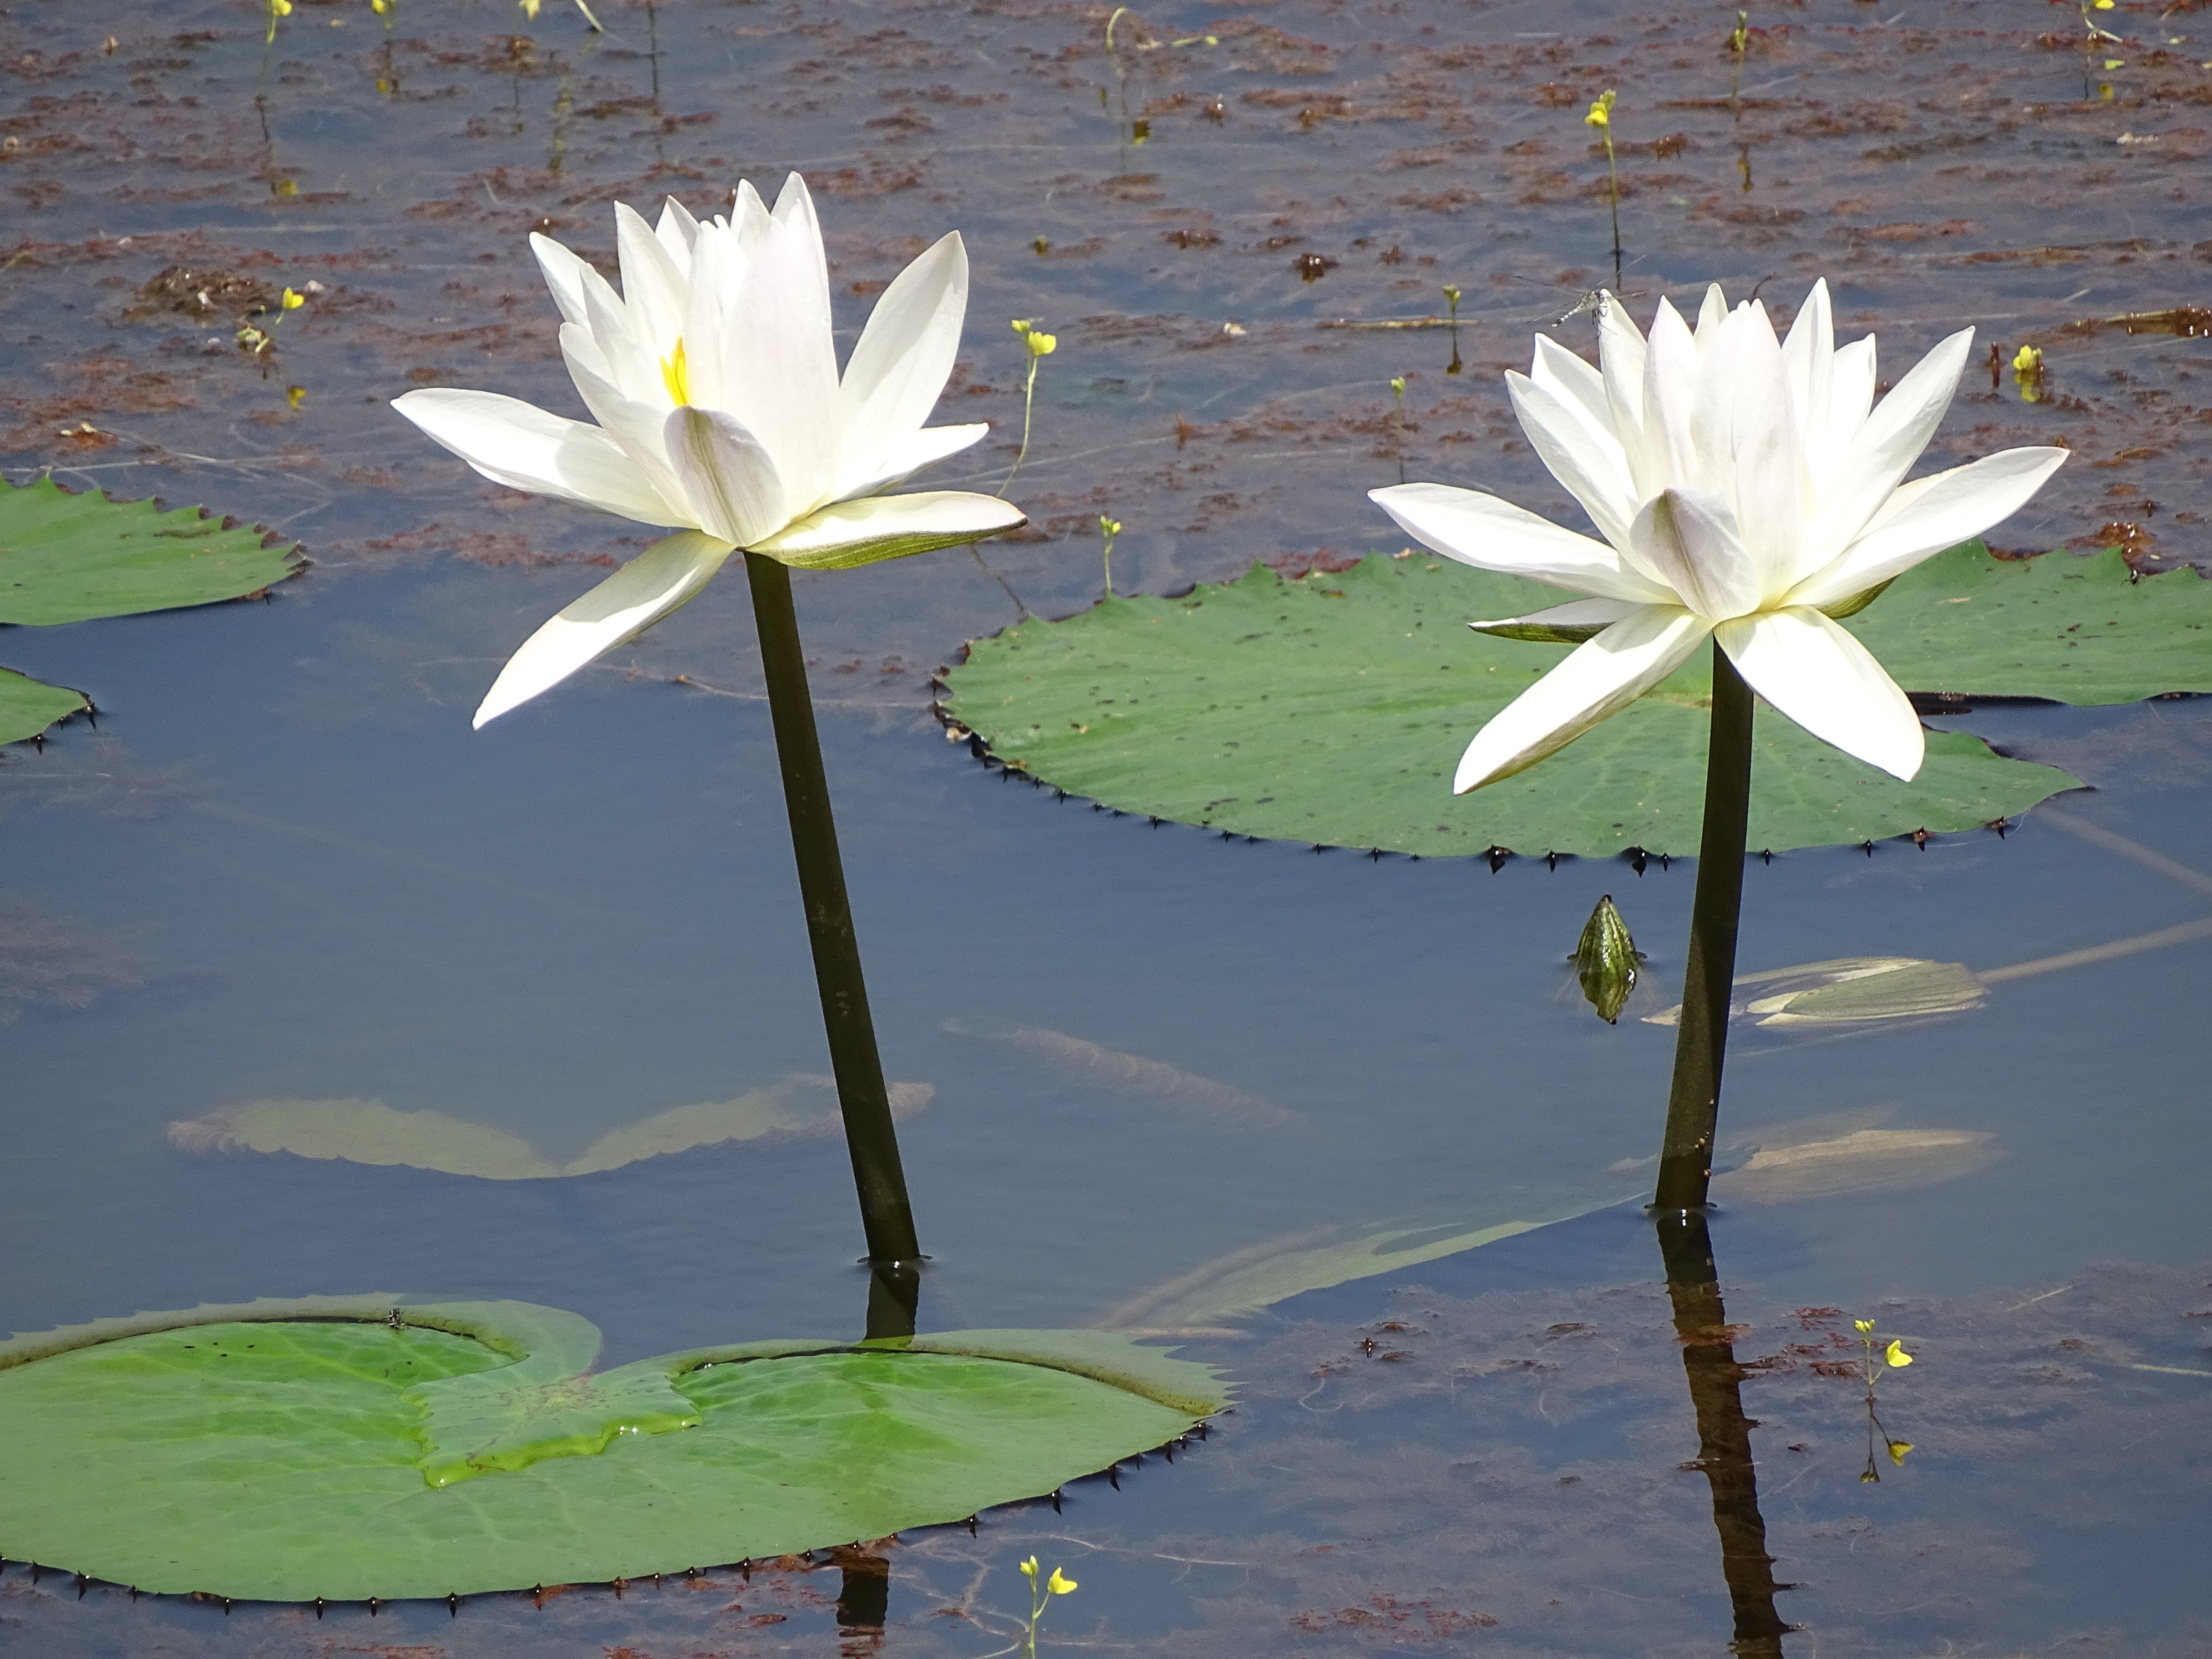 white lotus flowers